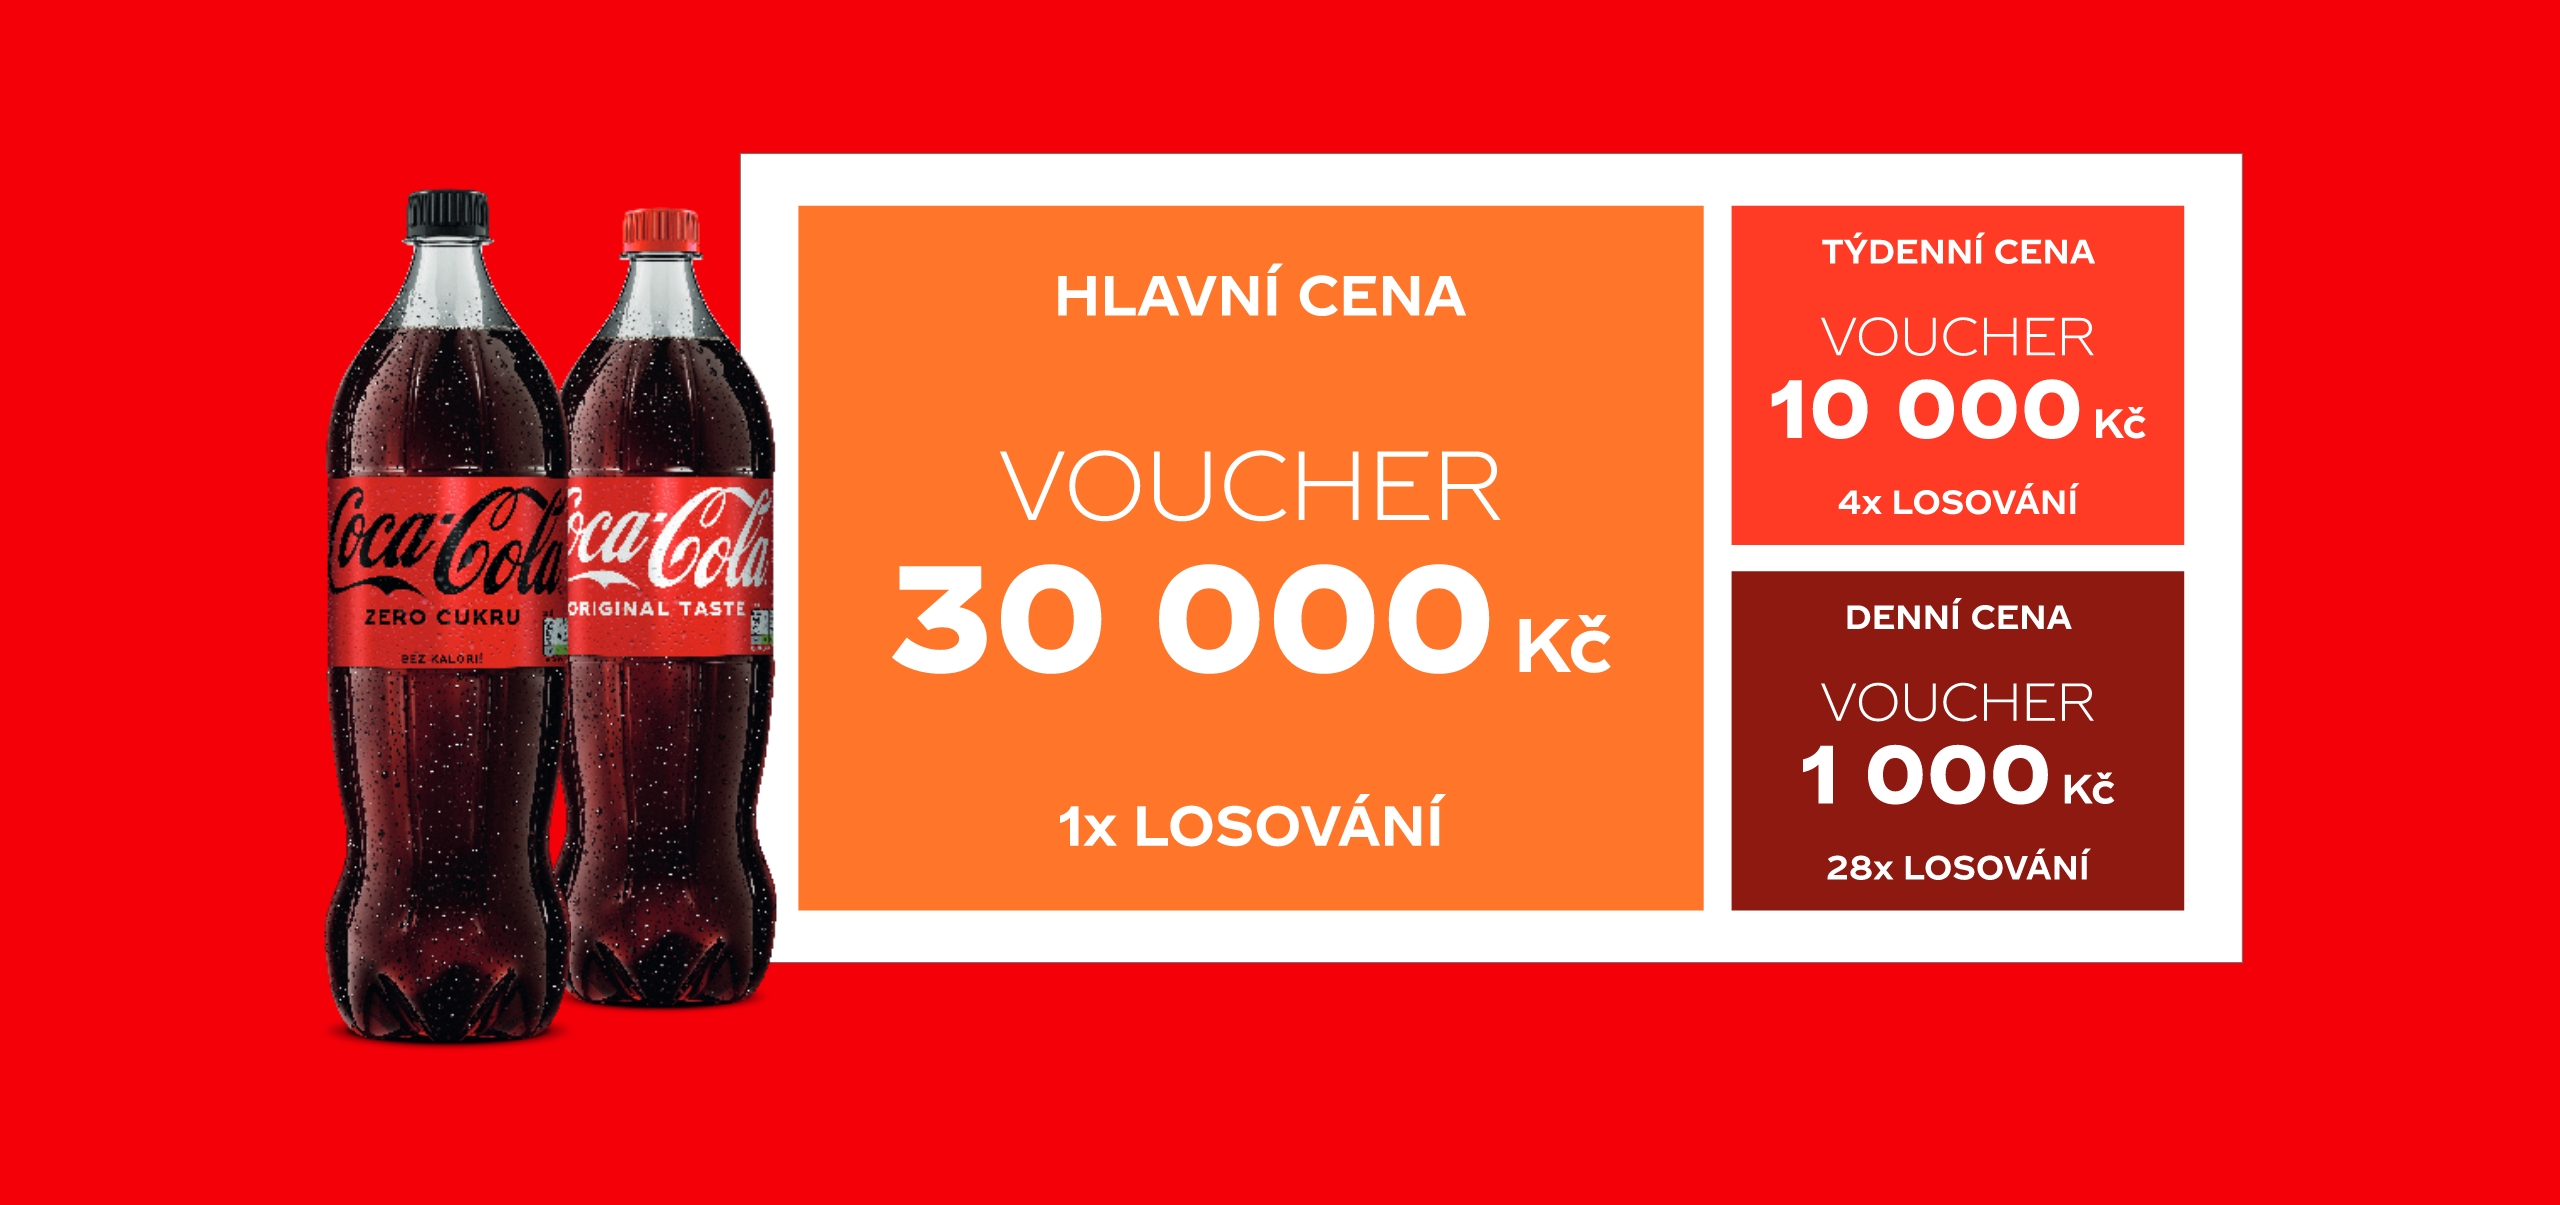 Vyhraj vouchery Globus s Coca-Colou